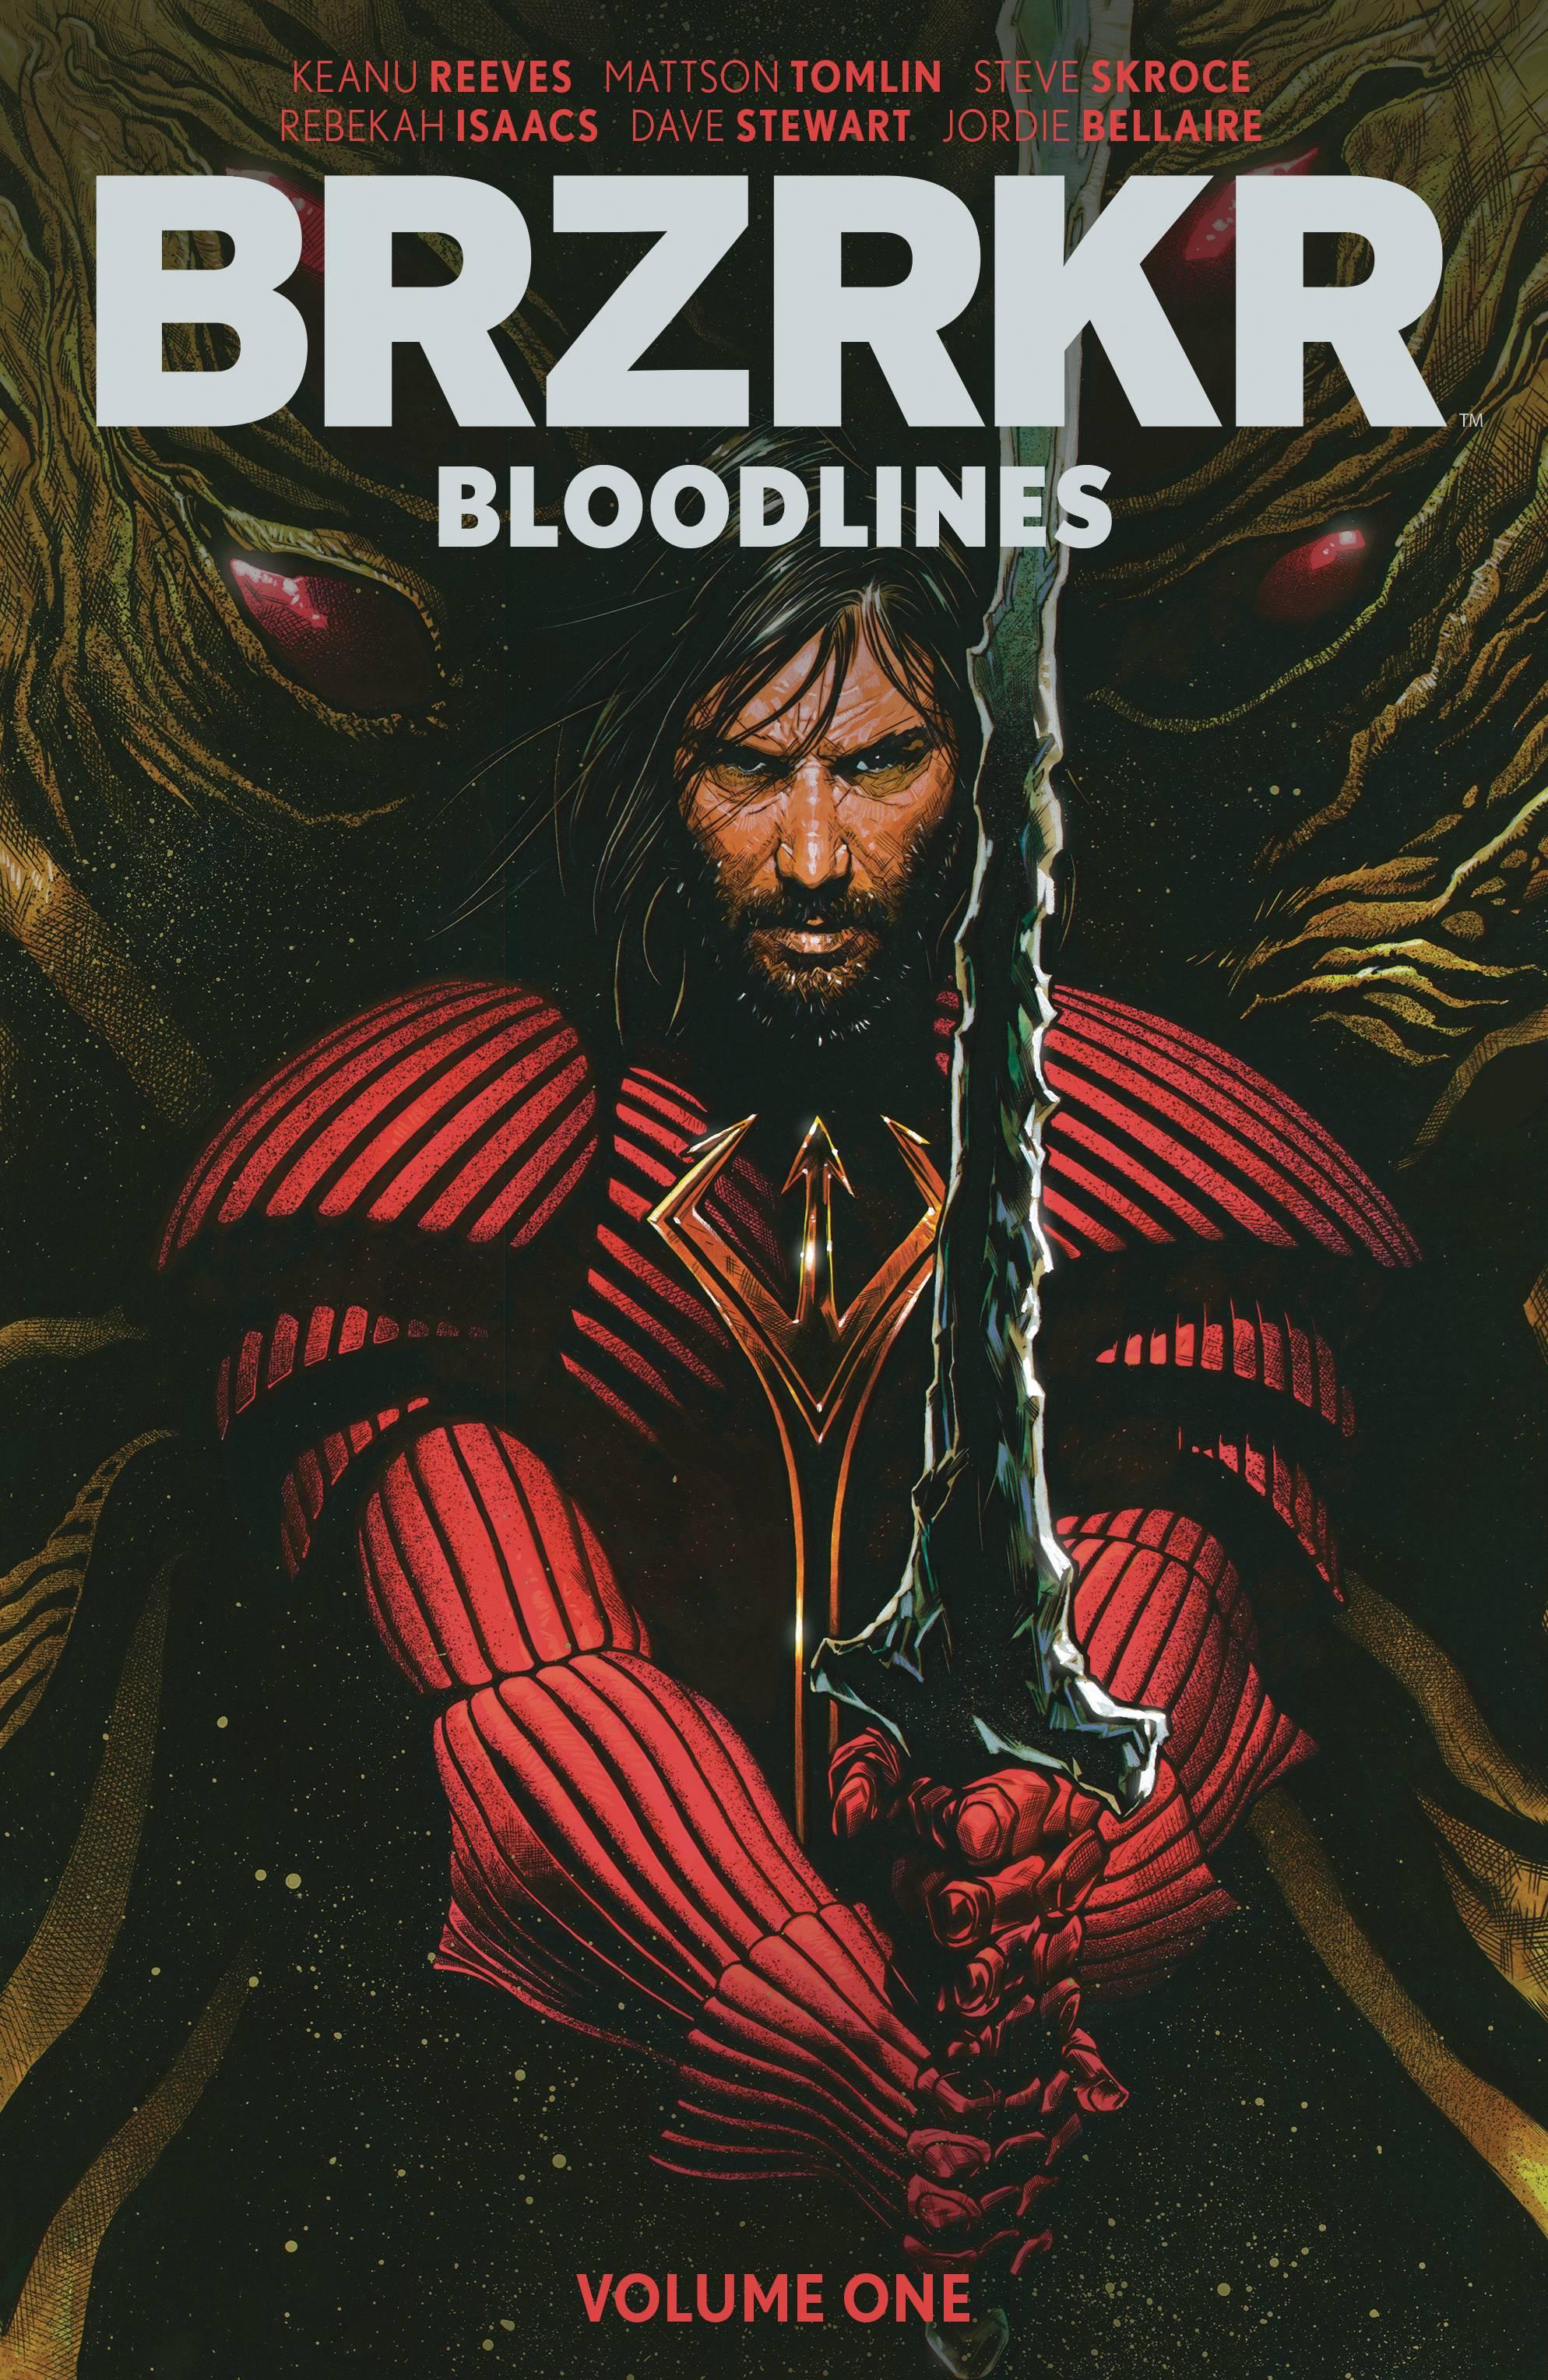 BRZRKR BLOODLINES TP VOL 01 - Kings Comics